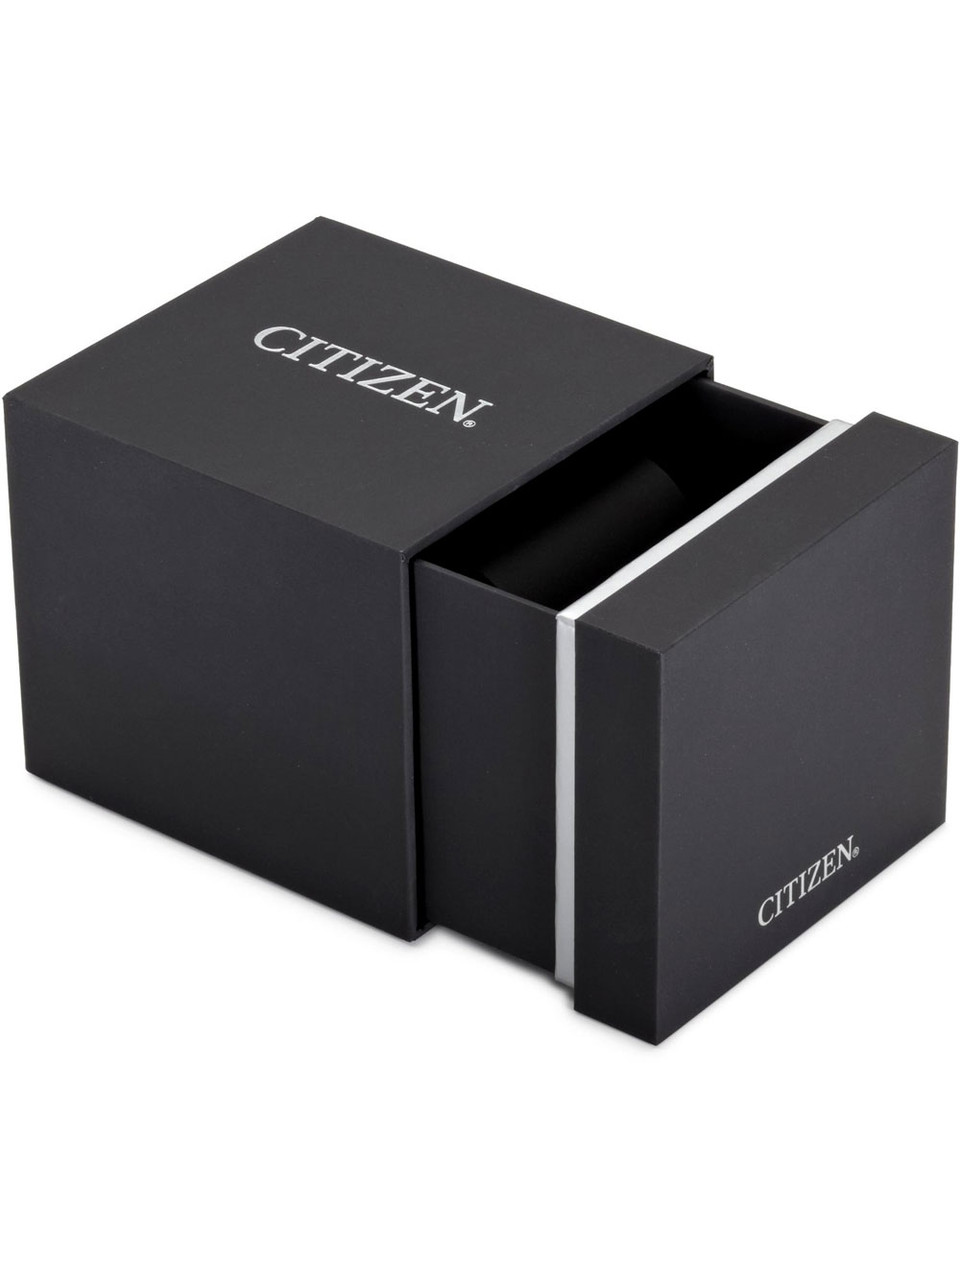 Citizen CA0700-86L Eco-Drive 43mm Chronograph 10 owlica Genuine Super-Titanium Watches | - ATM